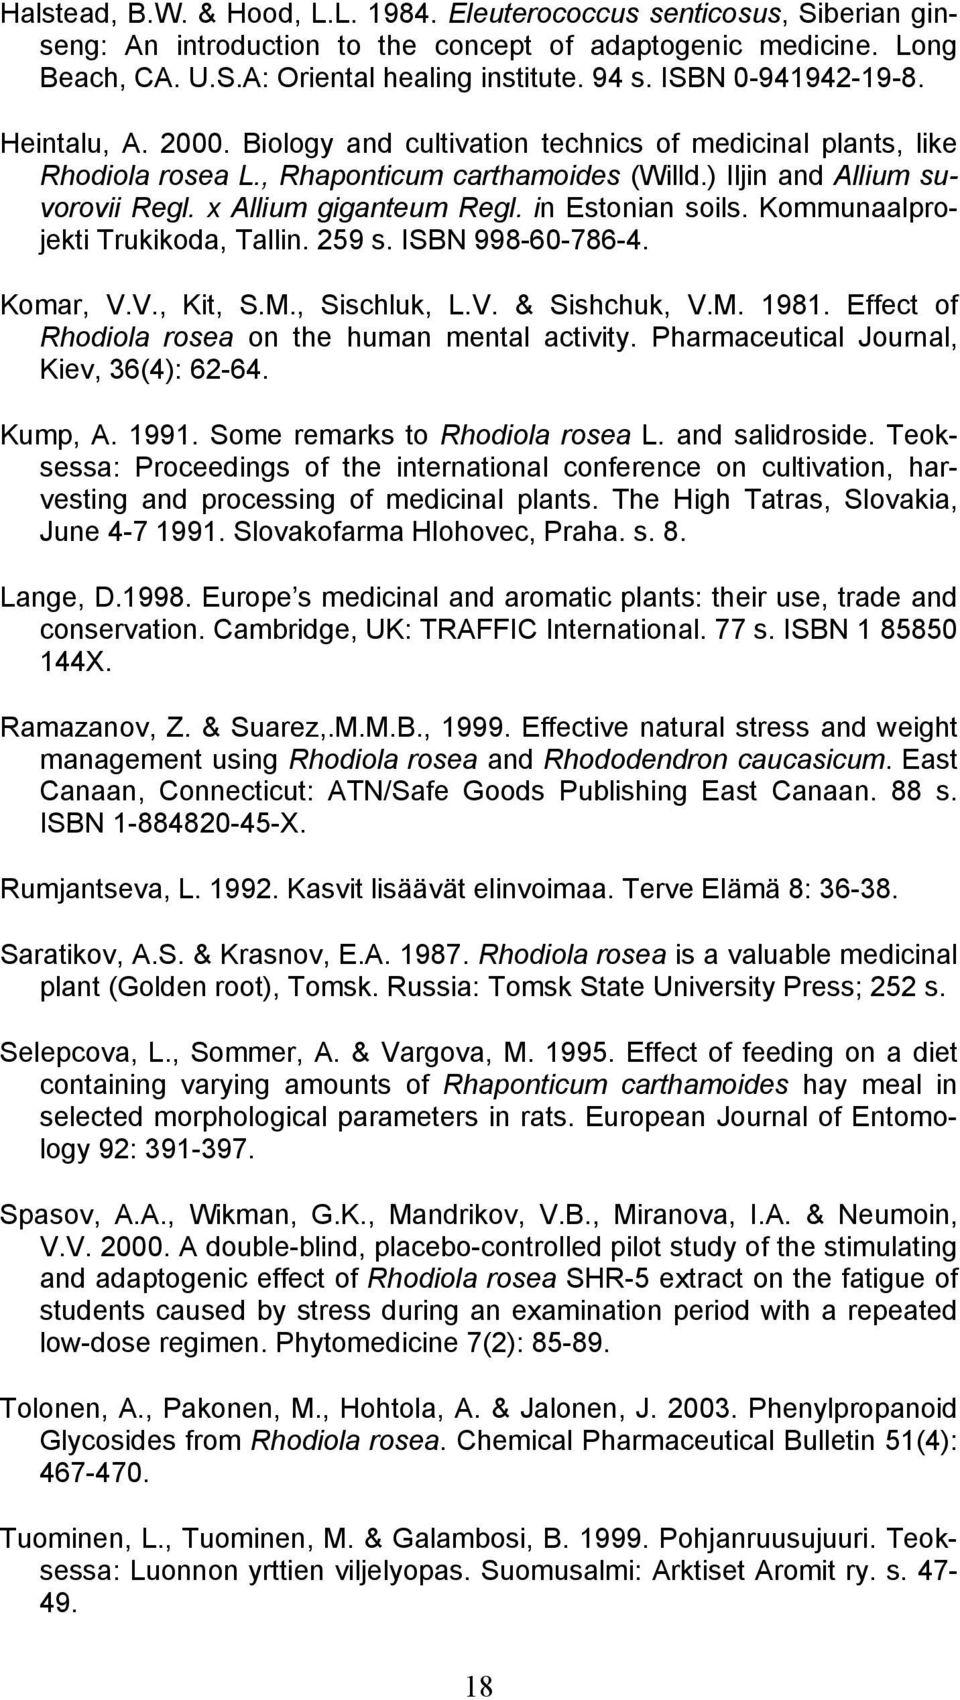 x Allium giganteum Regl. in Estonian soils. Kommunaalprojekti Trukikoda, Tallin. 259 s. ISBN 998-60-786-4. Komar, V.V., Kit, S.M., Sischluk, L.V. & Sishchuk, V.M. 1981.